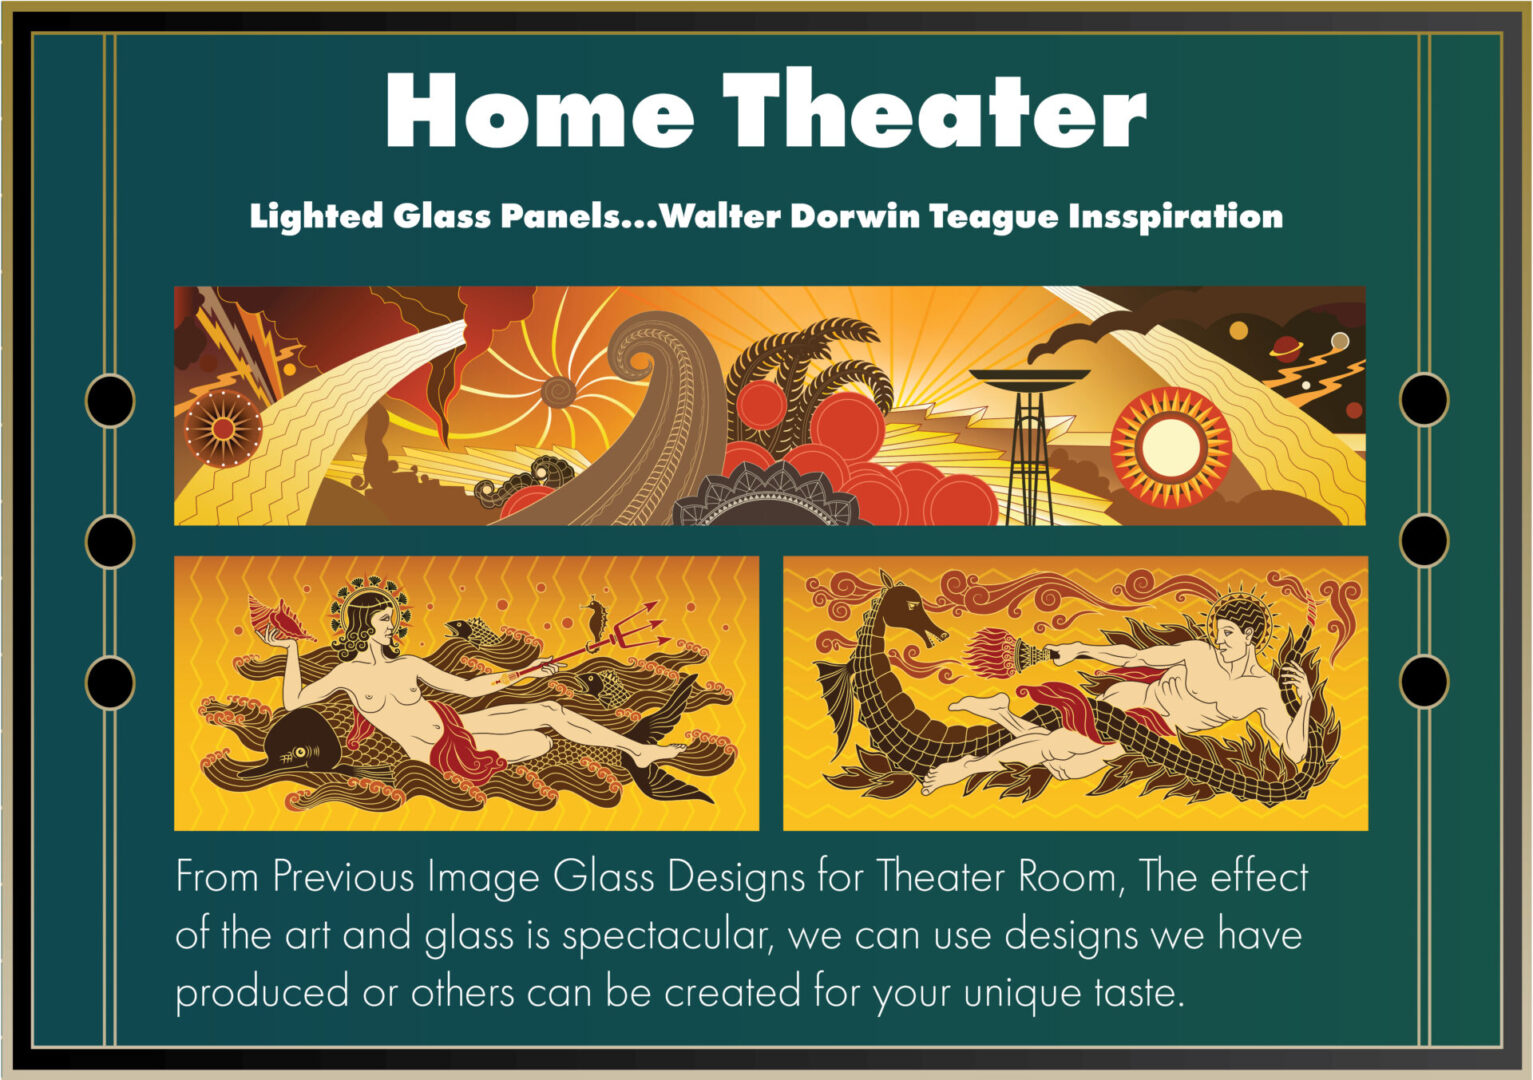 Walter Dorwin Teague Inspired Home Theater Design